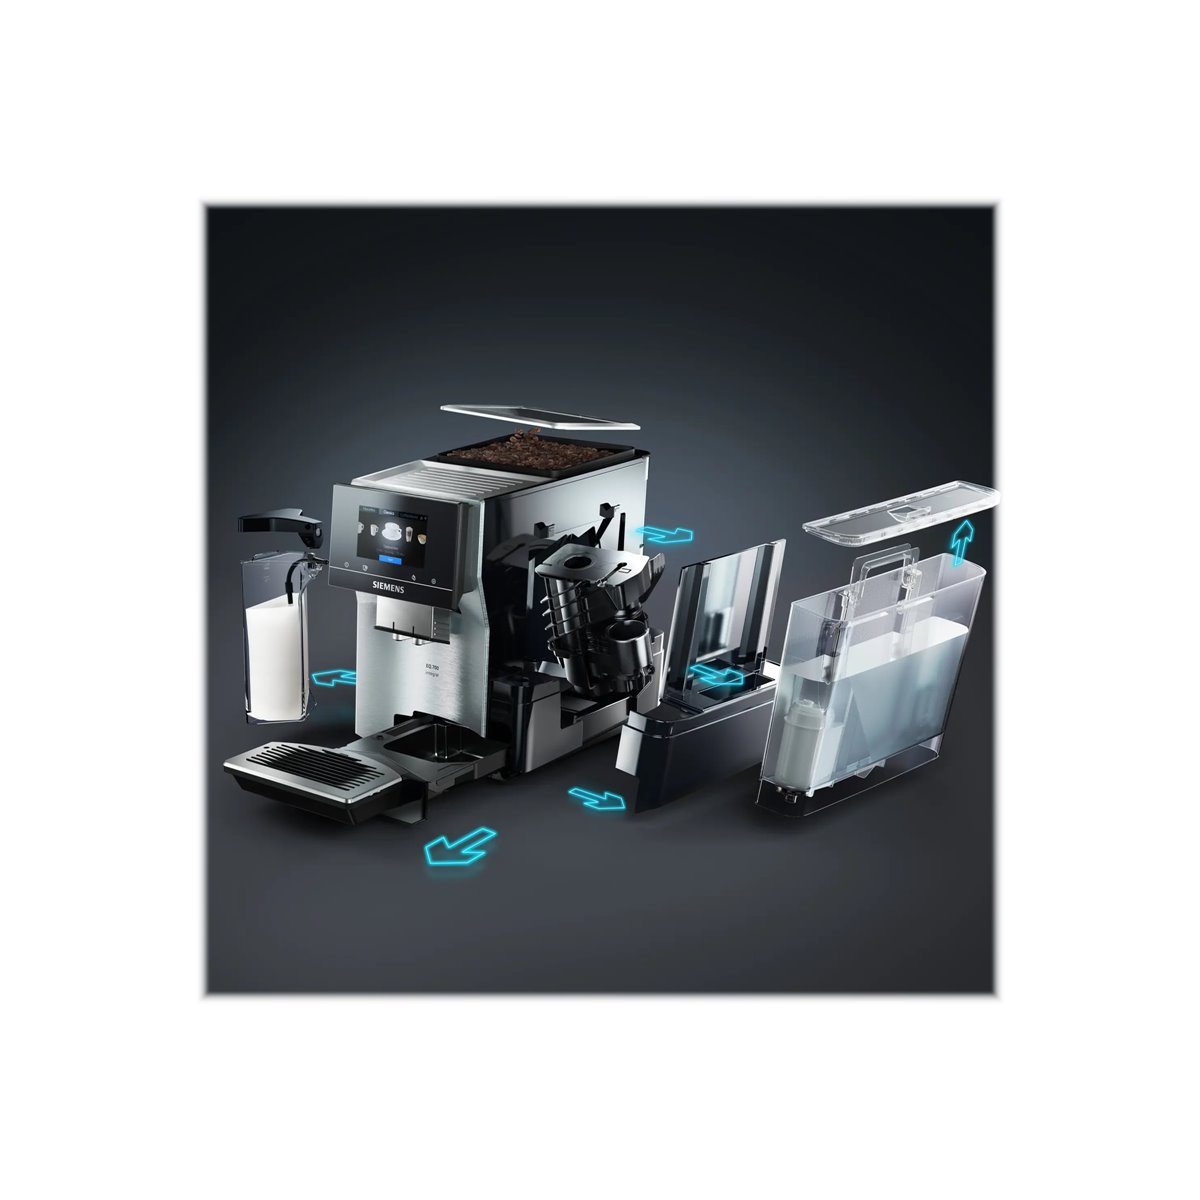 Siemens TQ707D03 - Combi coffee maker - 2.4 L - Coffee beans - Built-in grinder - 1500 W - Black